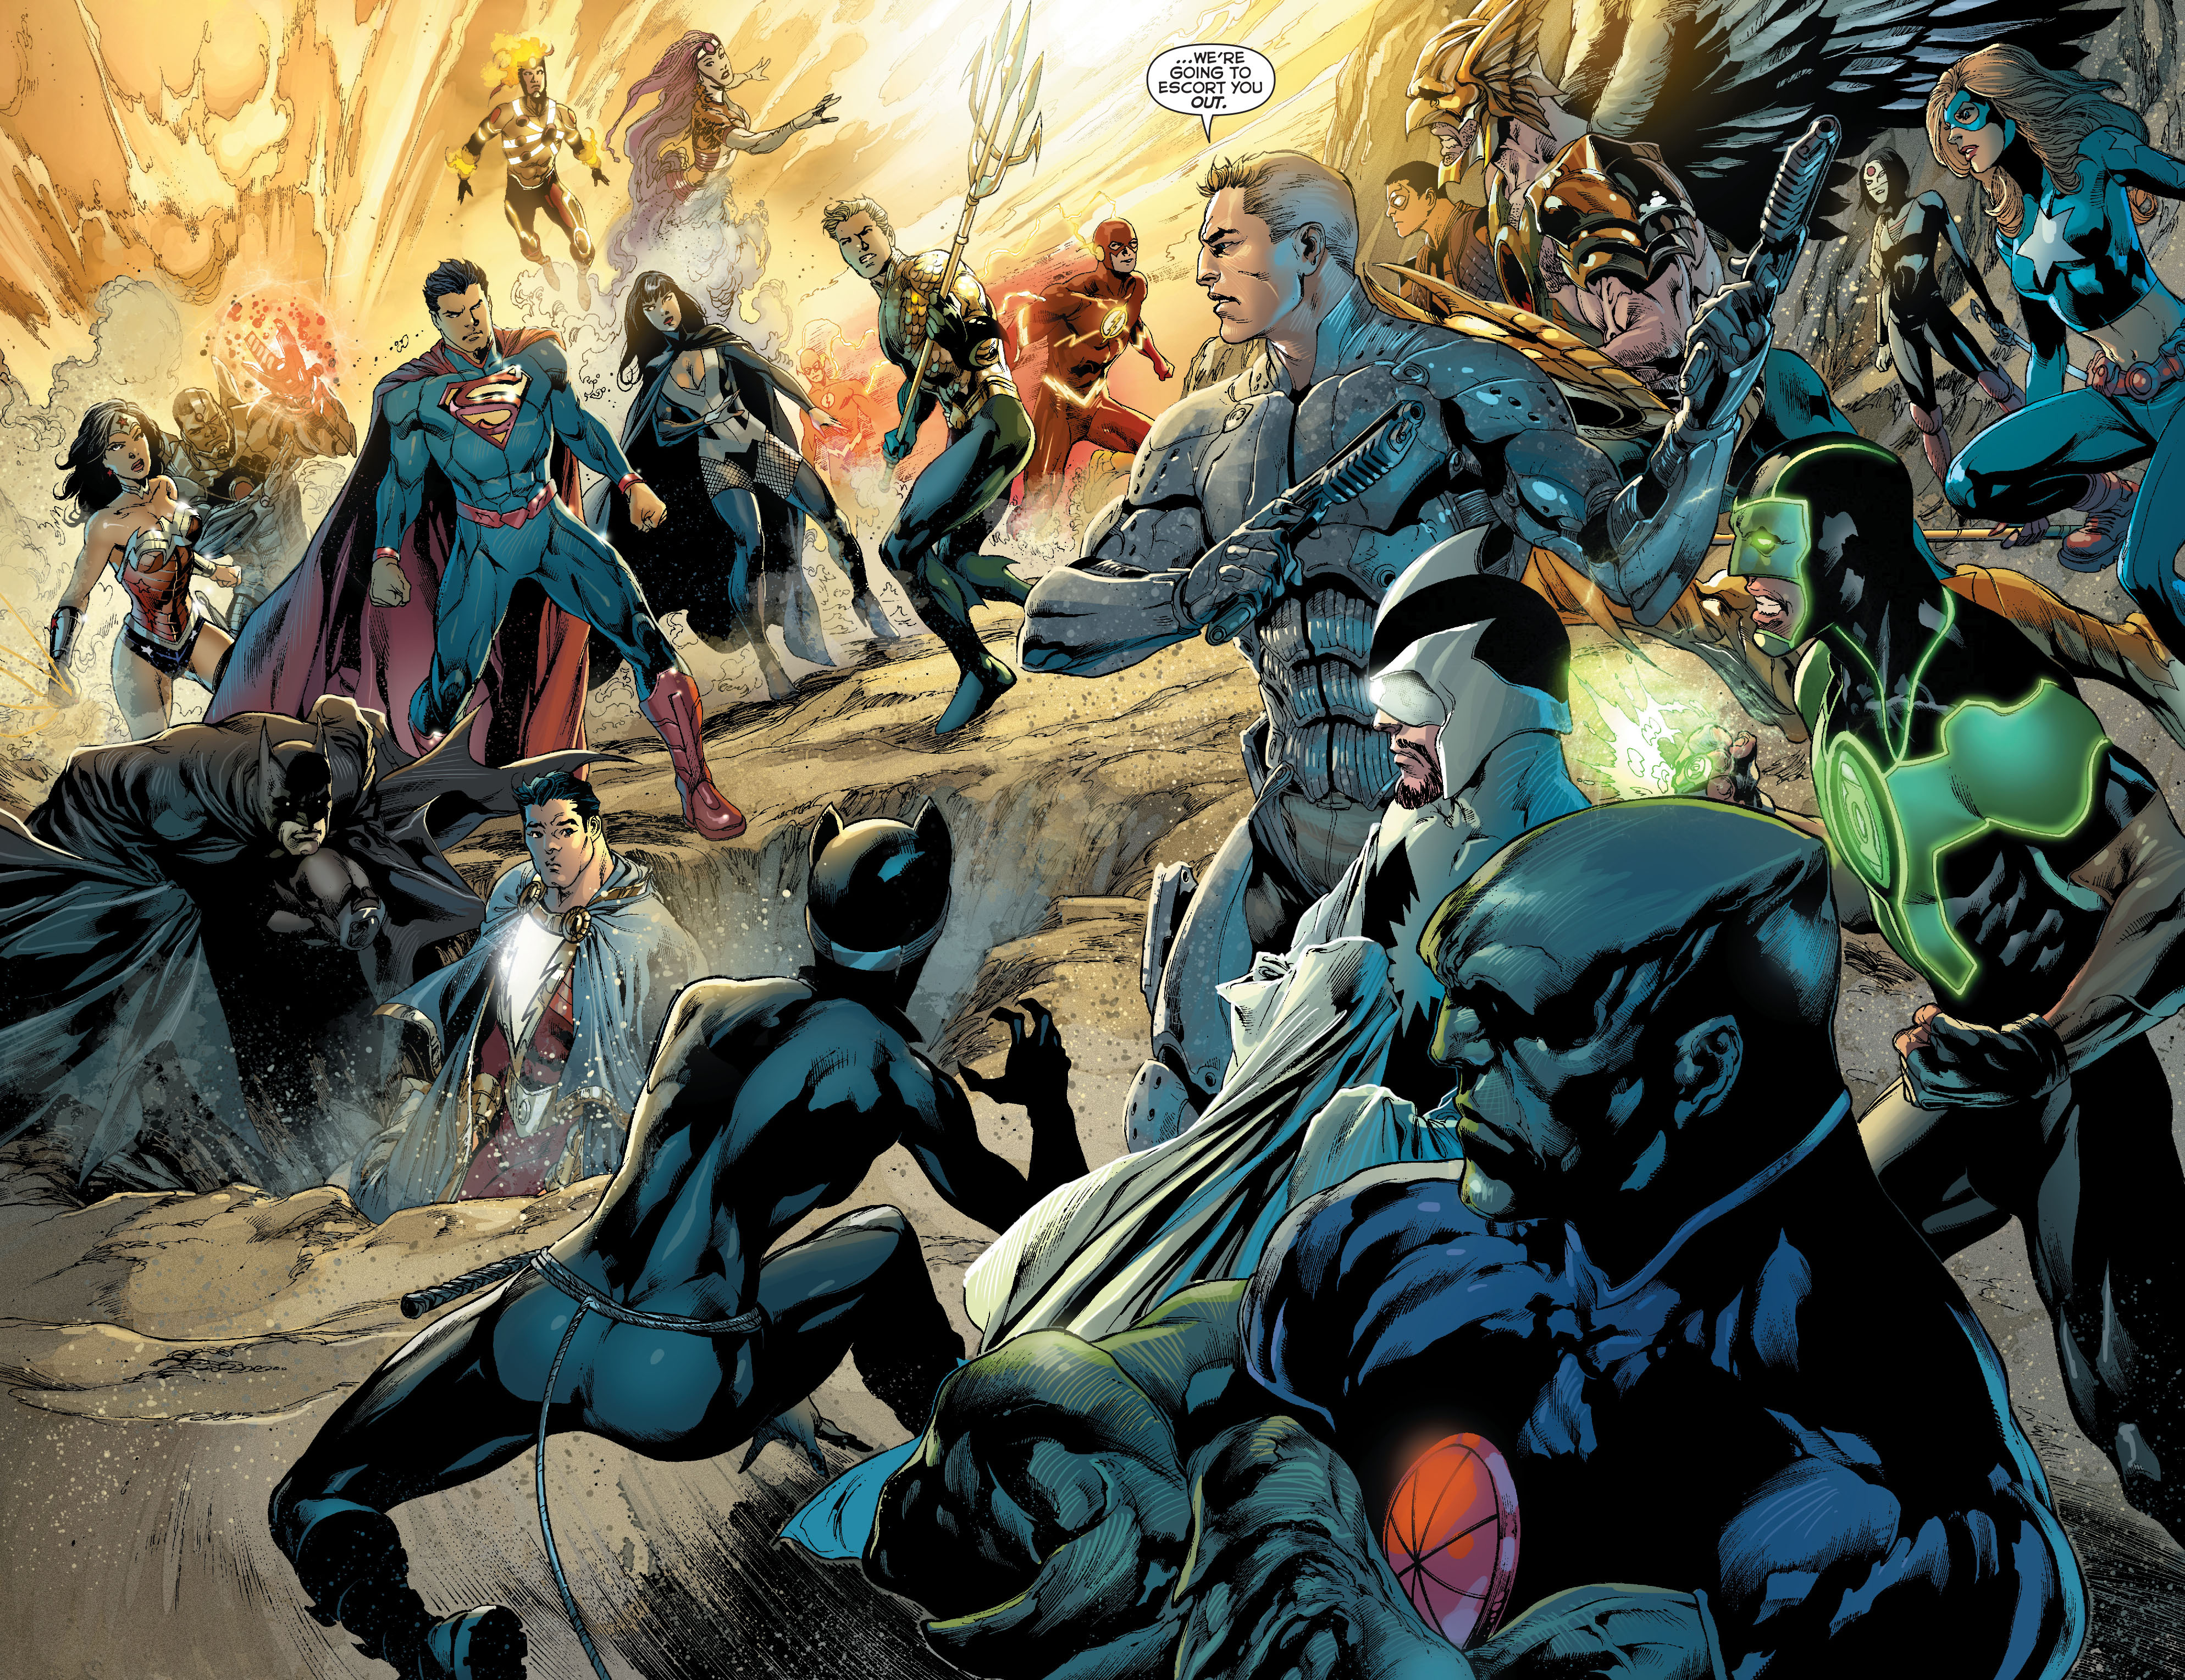 Justice League Trinity War